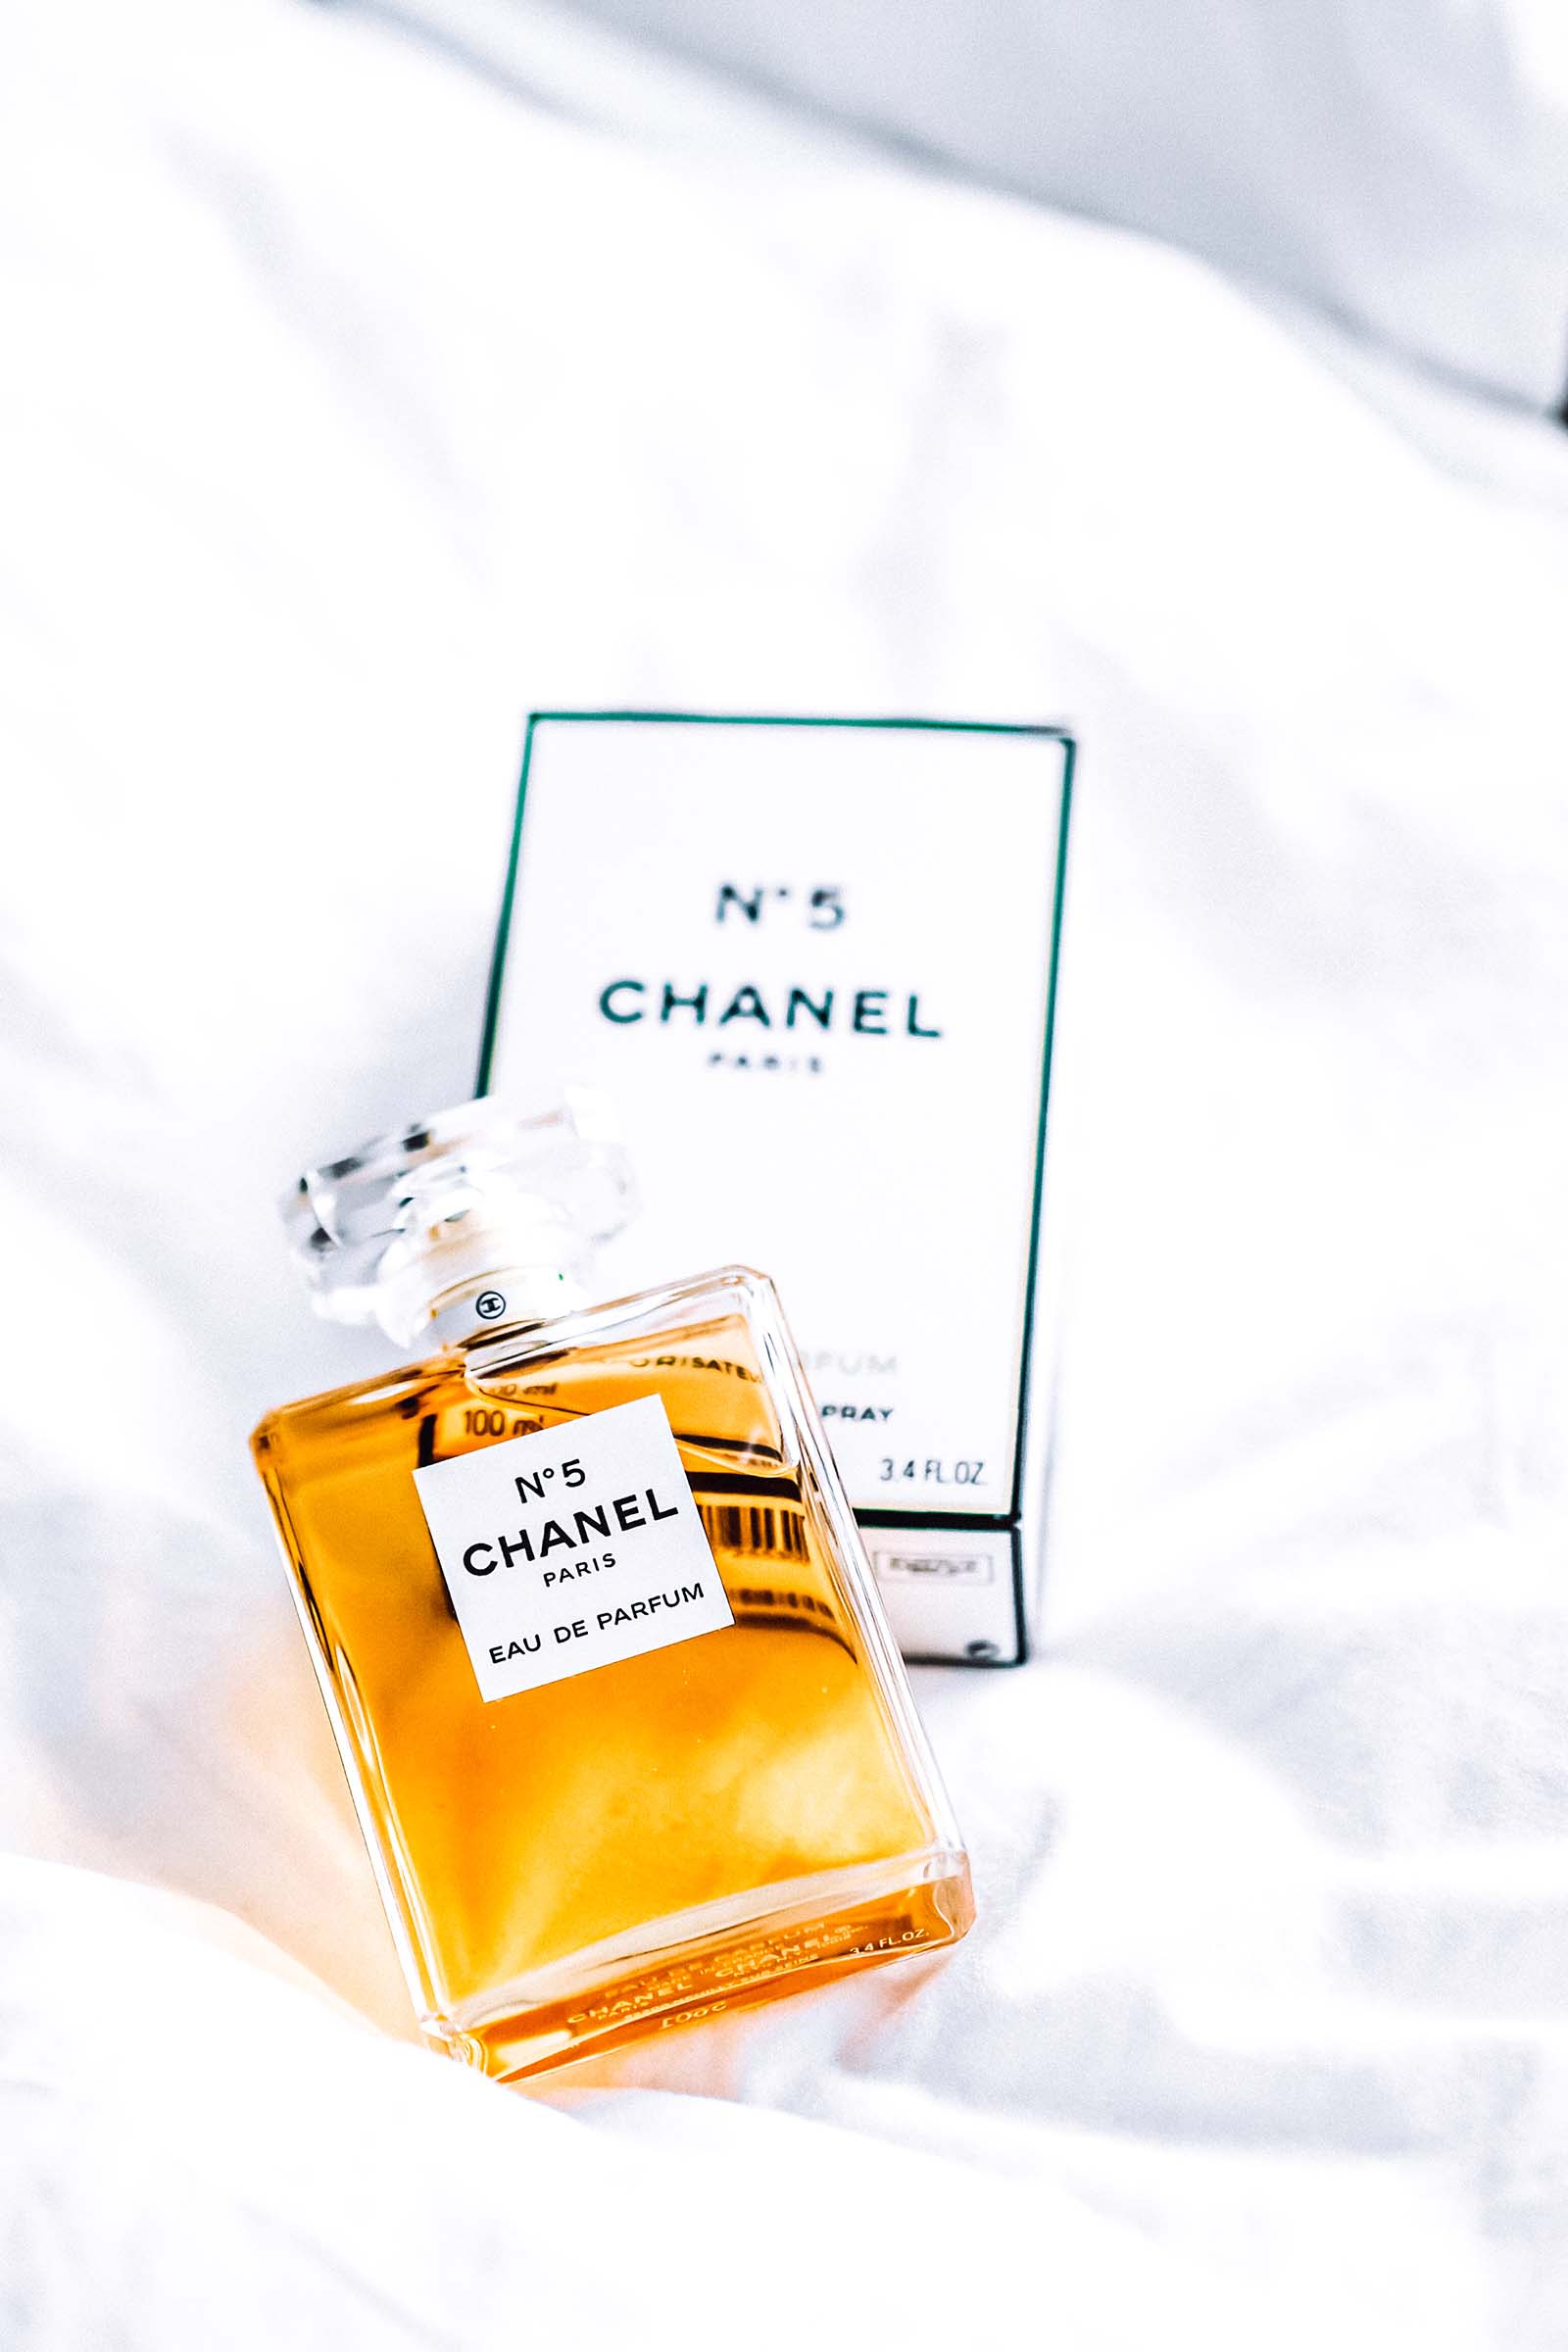 history of chanel no. 5 perfume